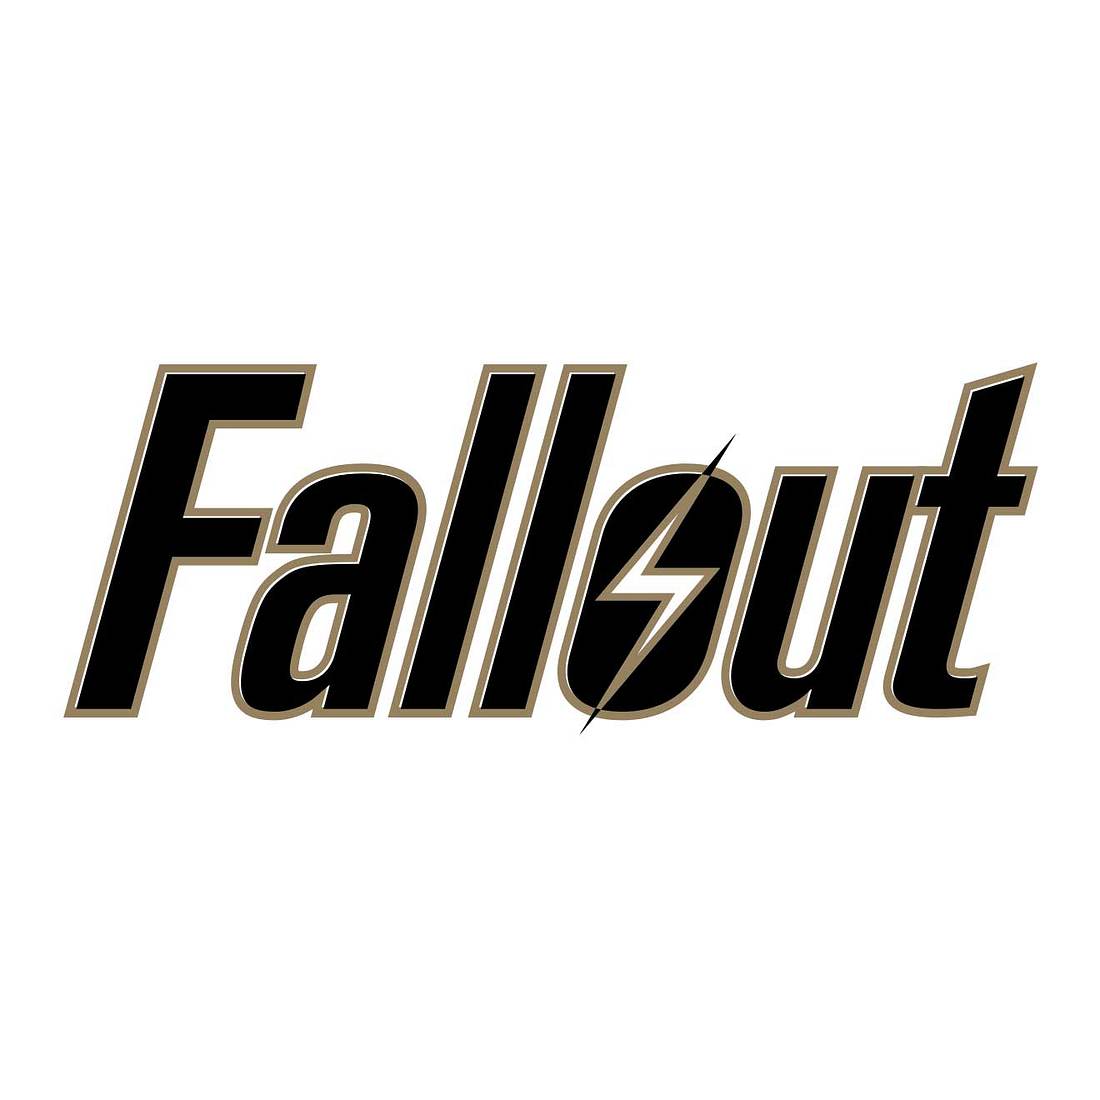 Nach The Witcher: Amazon greift Netflix mit Fallout-Spiele-Verfilmung an